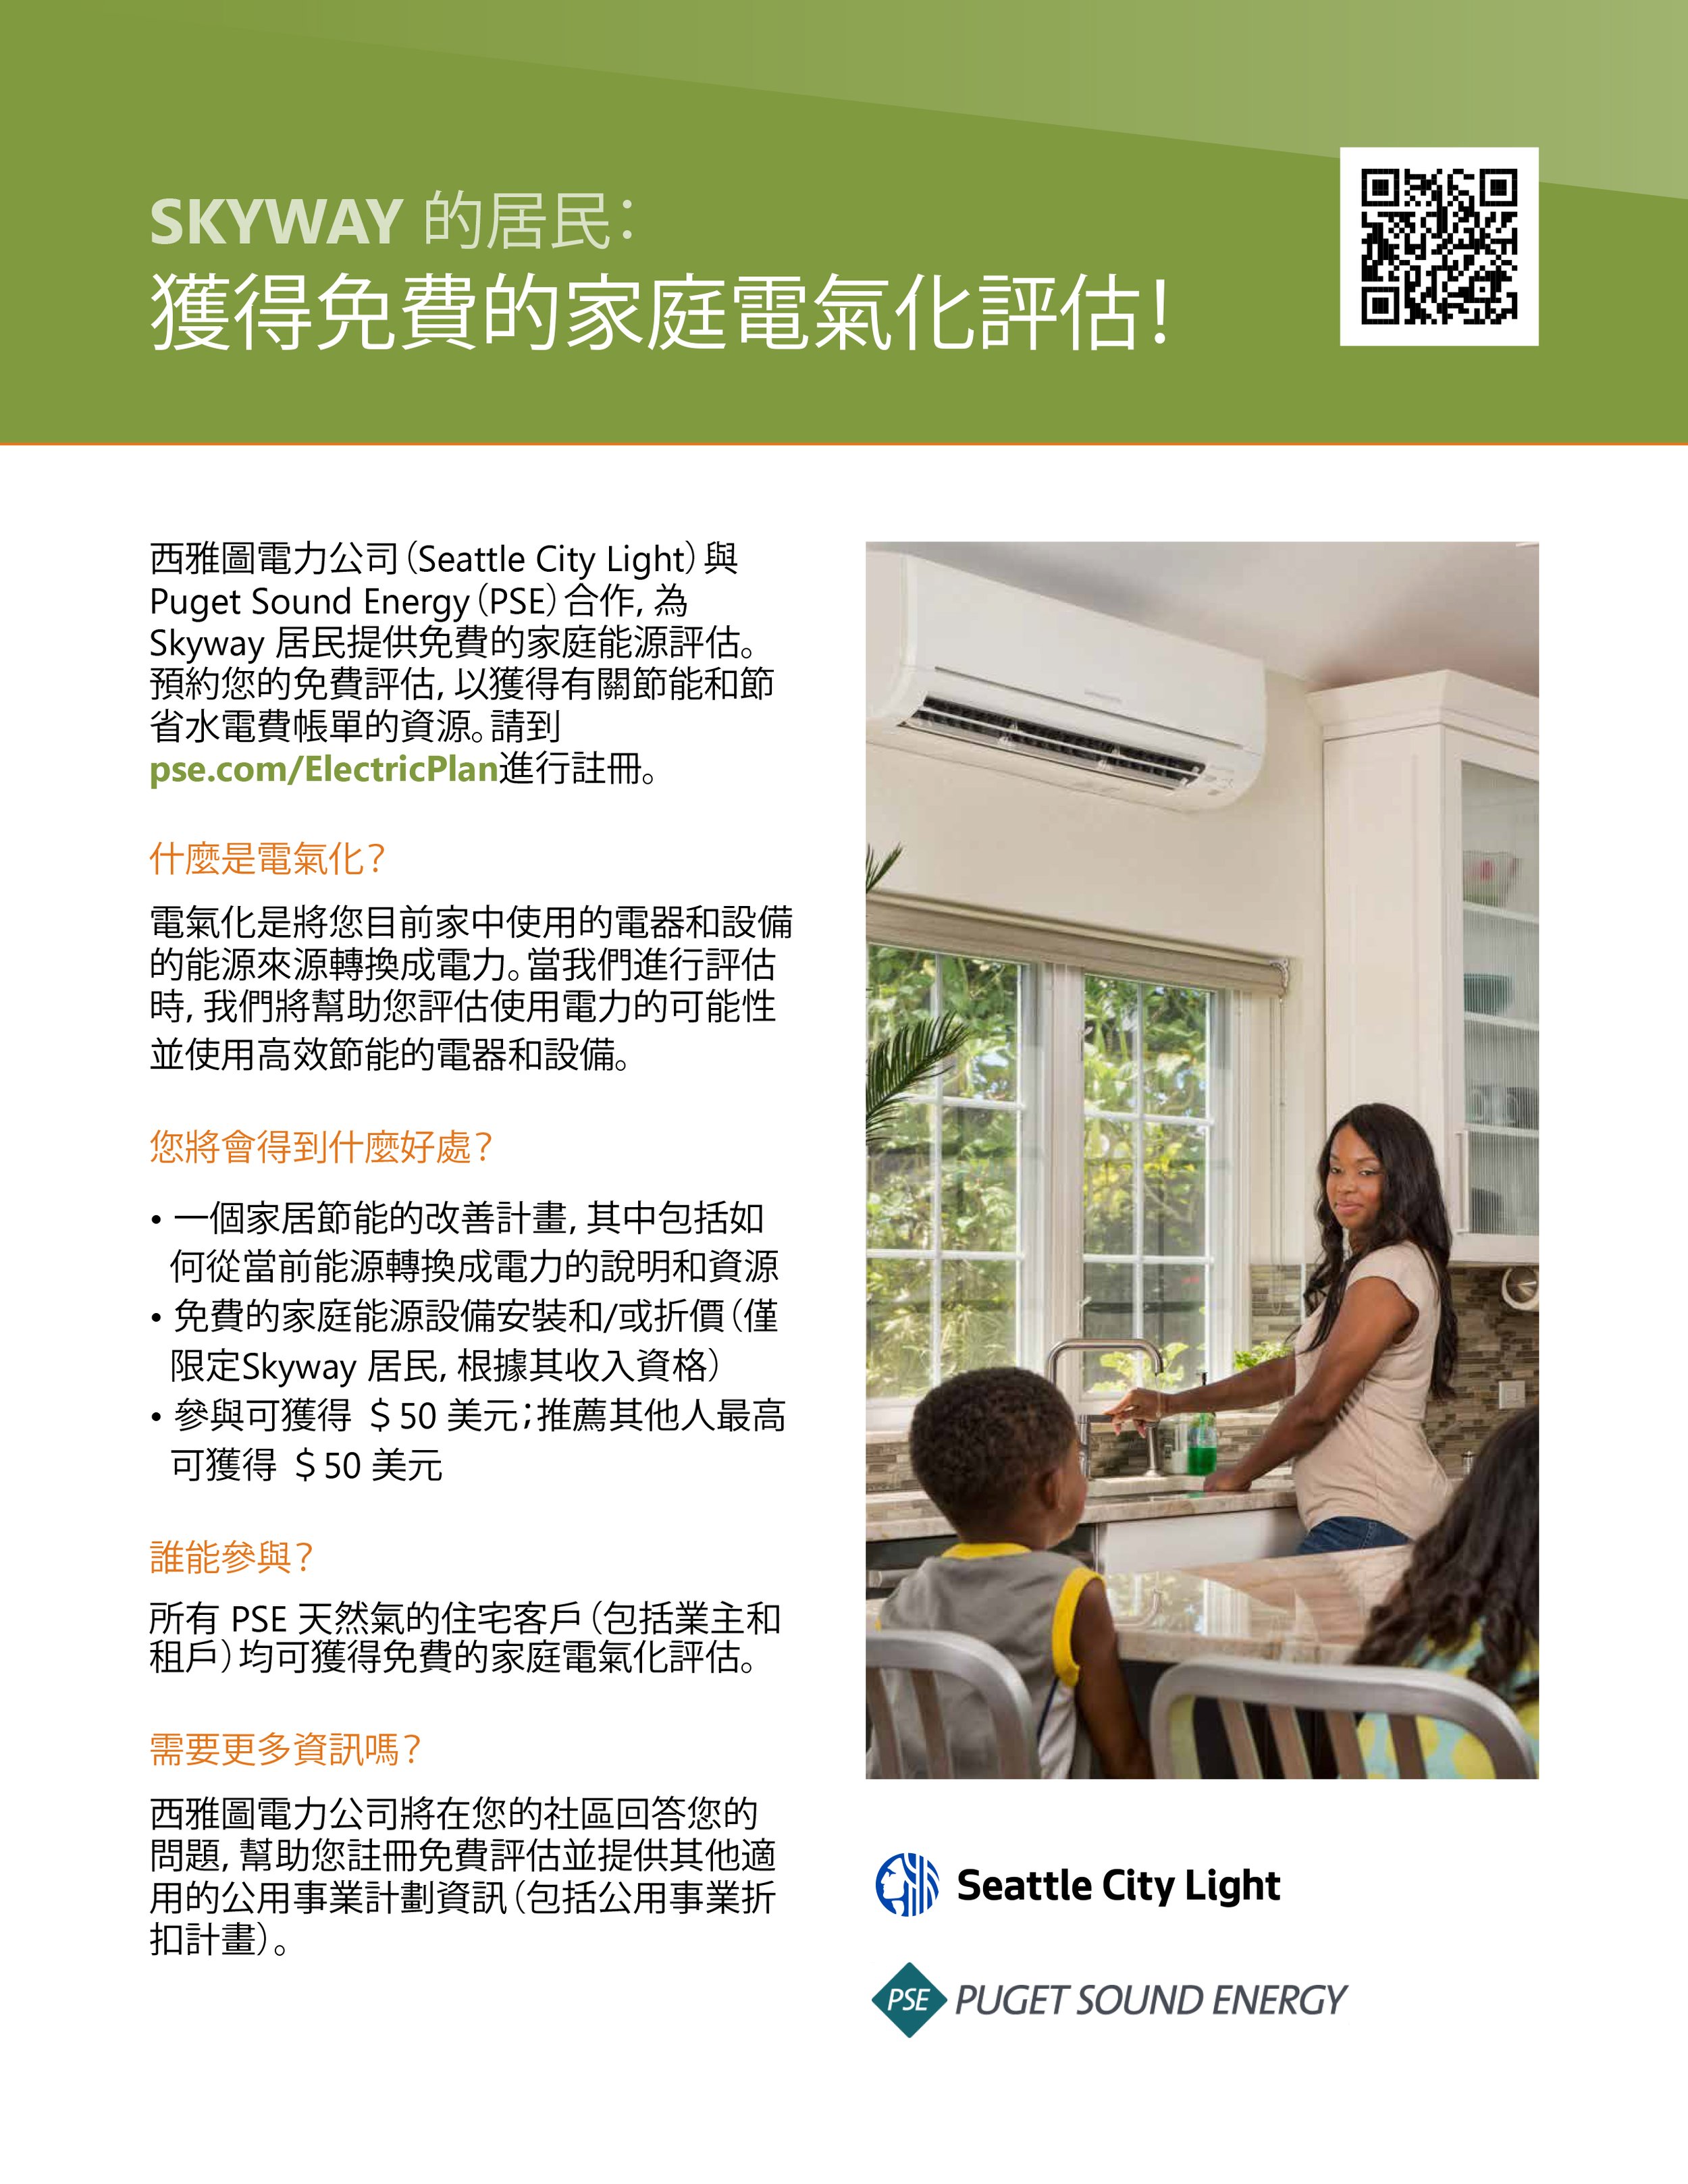 HomeElectrificationAssessment_Skyway_Chinese.jpg